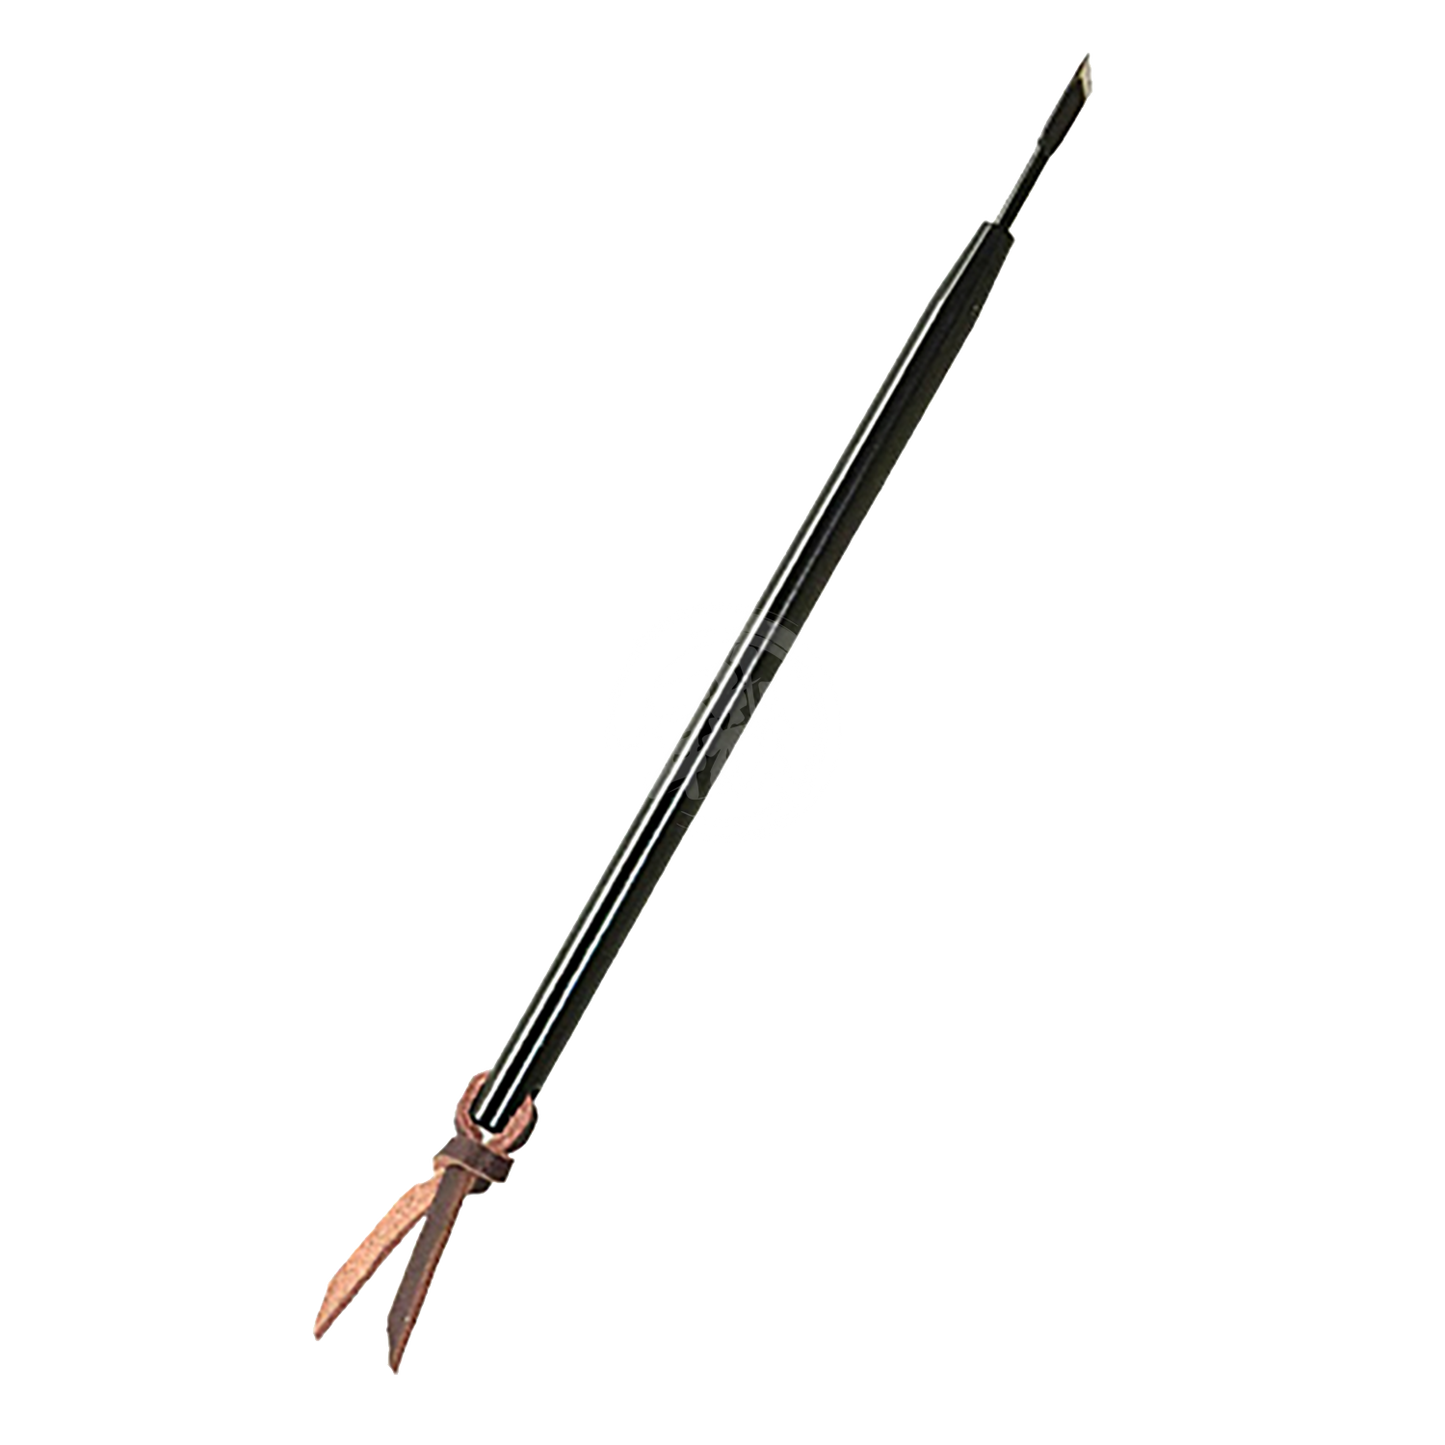 Eiger SUZIBORI - Precision Knife TK-06 [Oblique Blade Large] - ShokuninGunpla